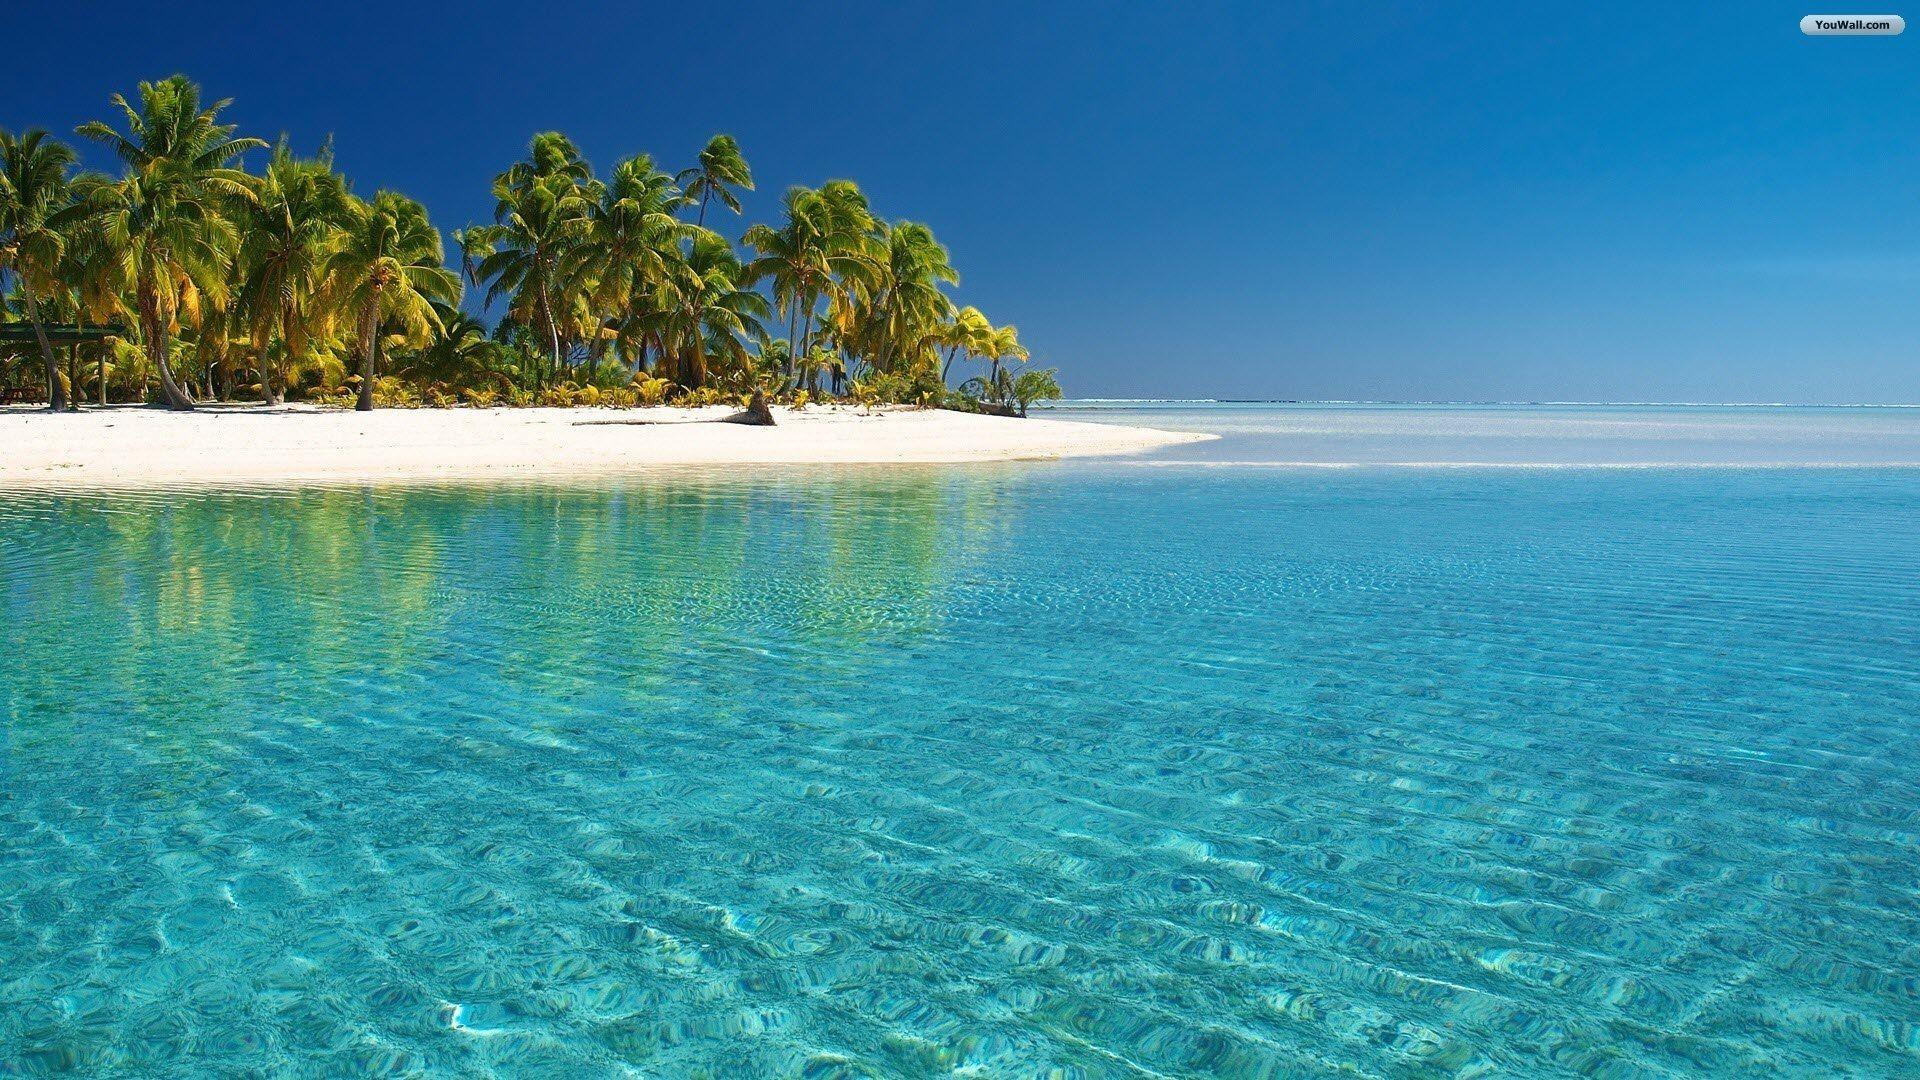 Best Tropical Beaches Desktop Wallpaper FULL HD 1920×1080 For PC